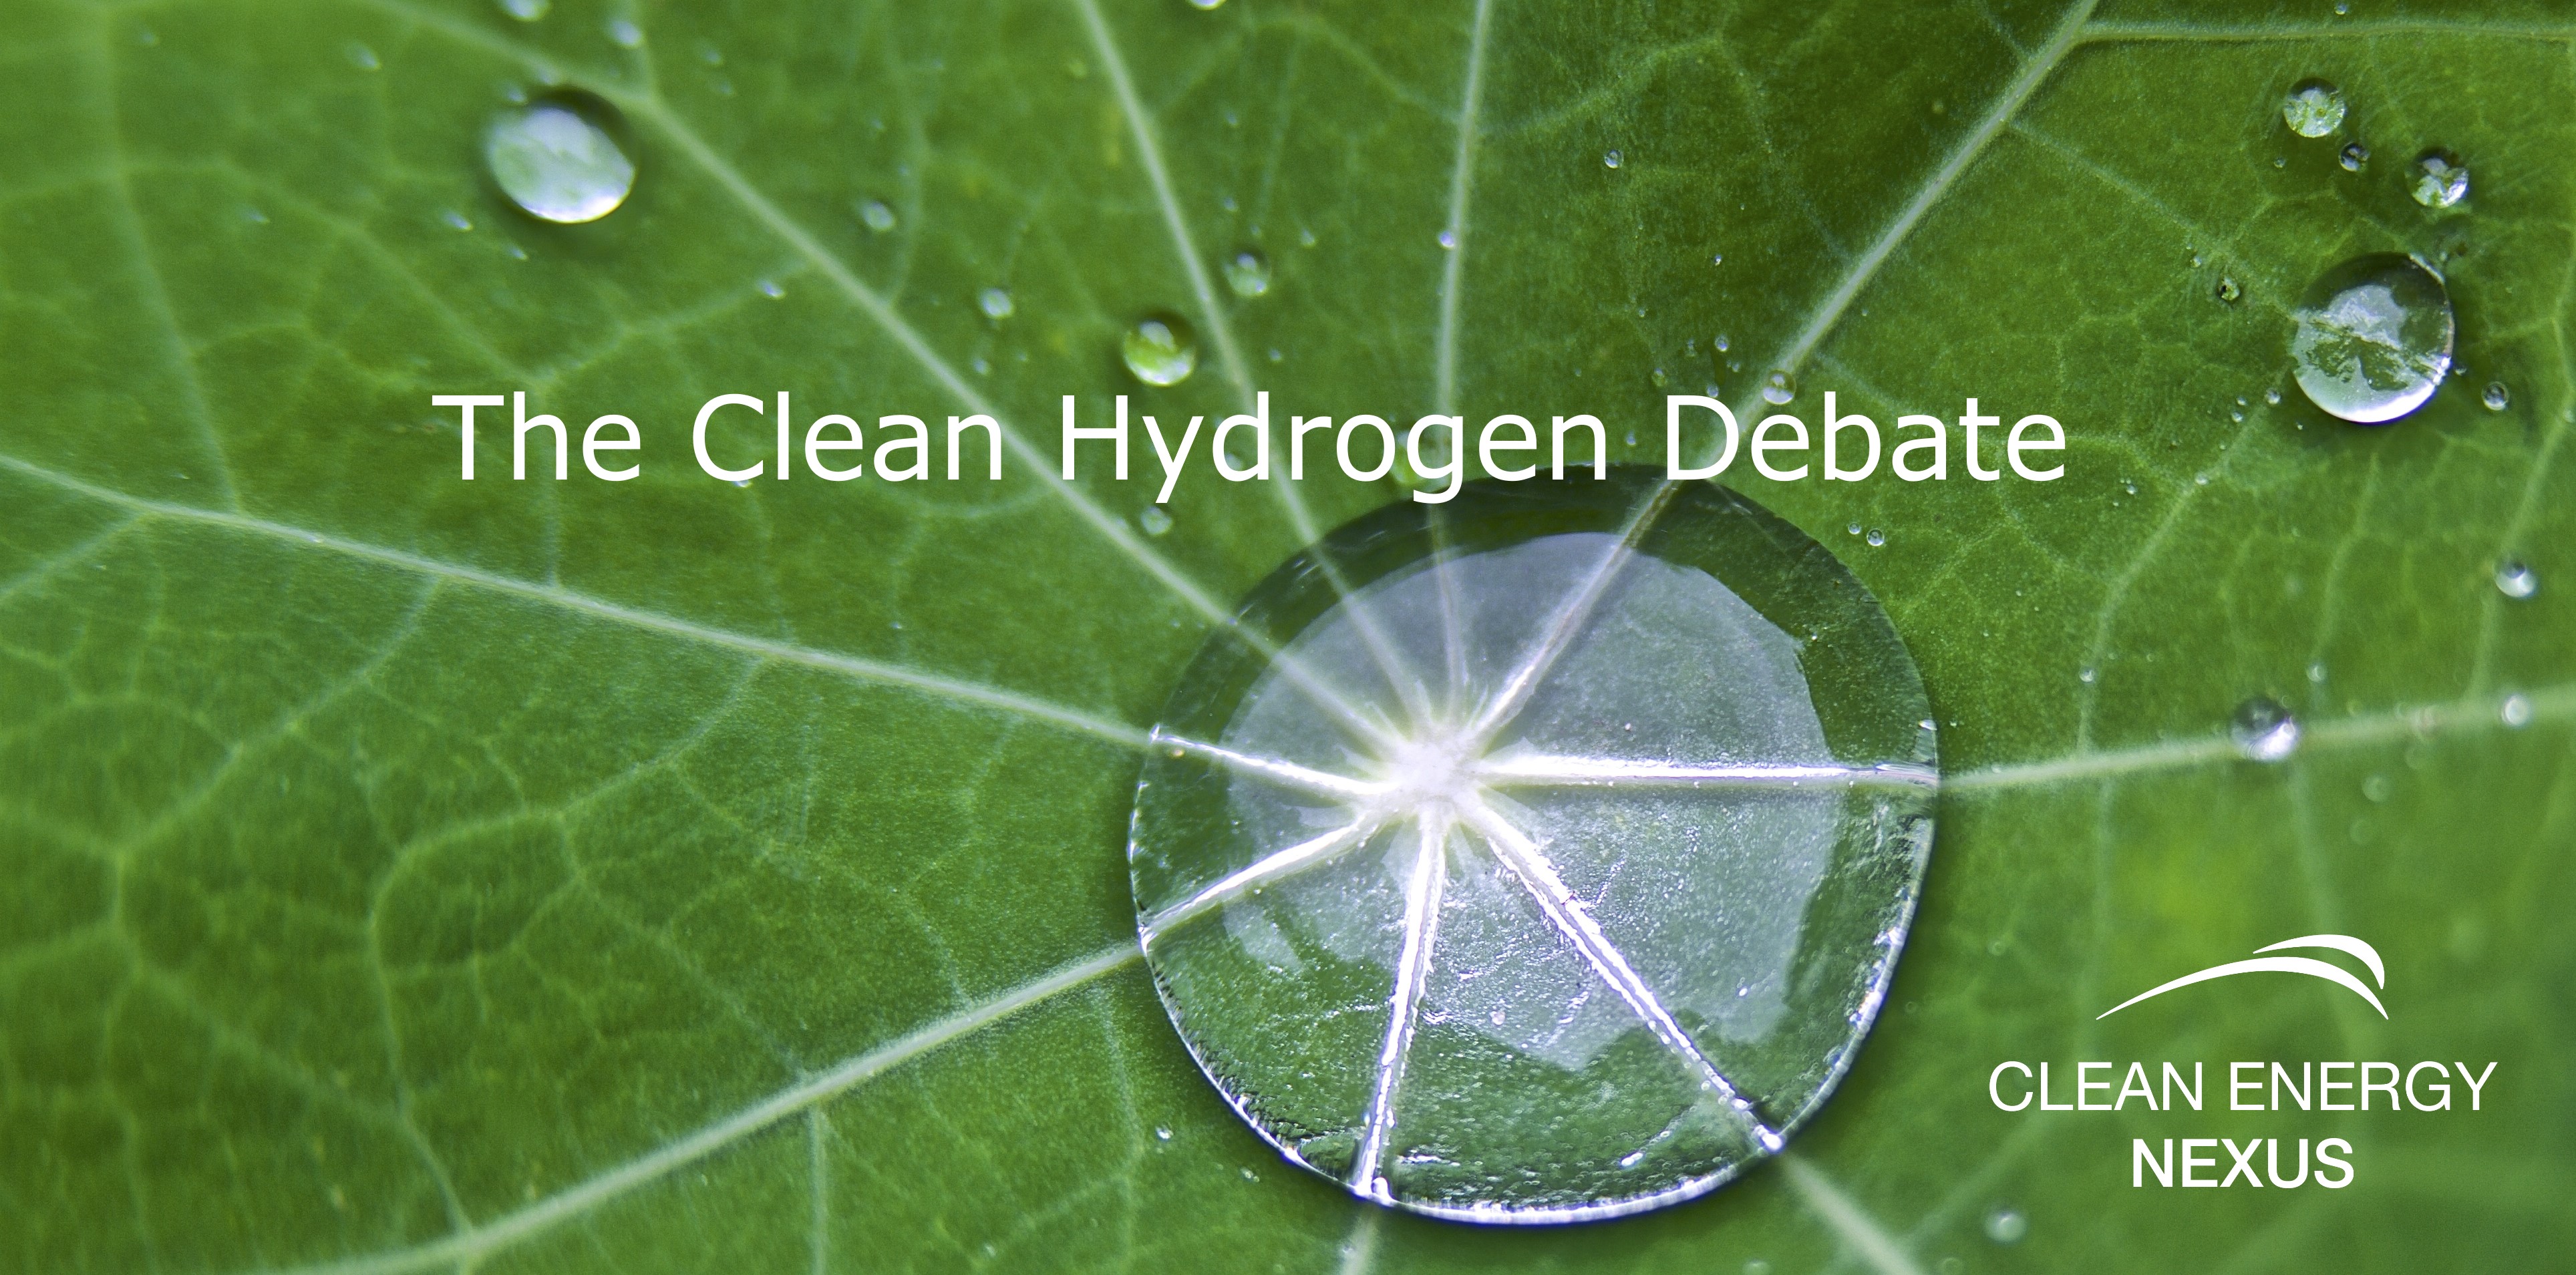 The Clean Hydrogen Debate